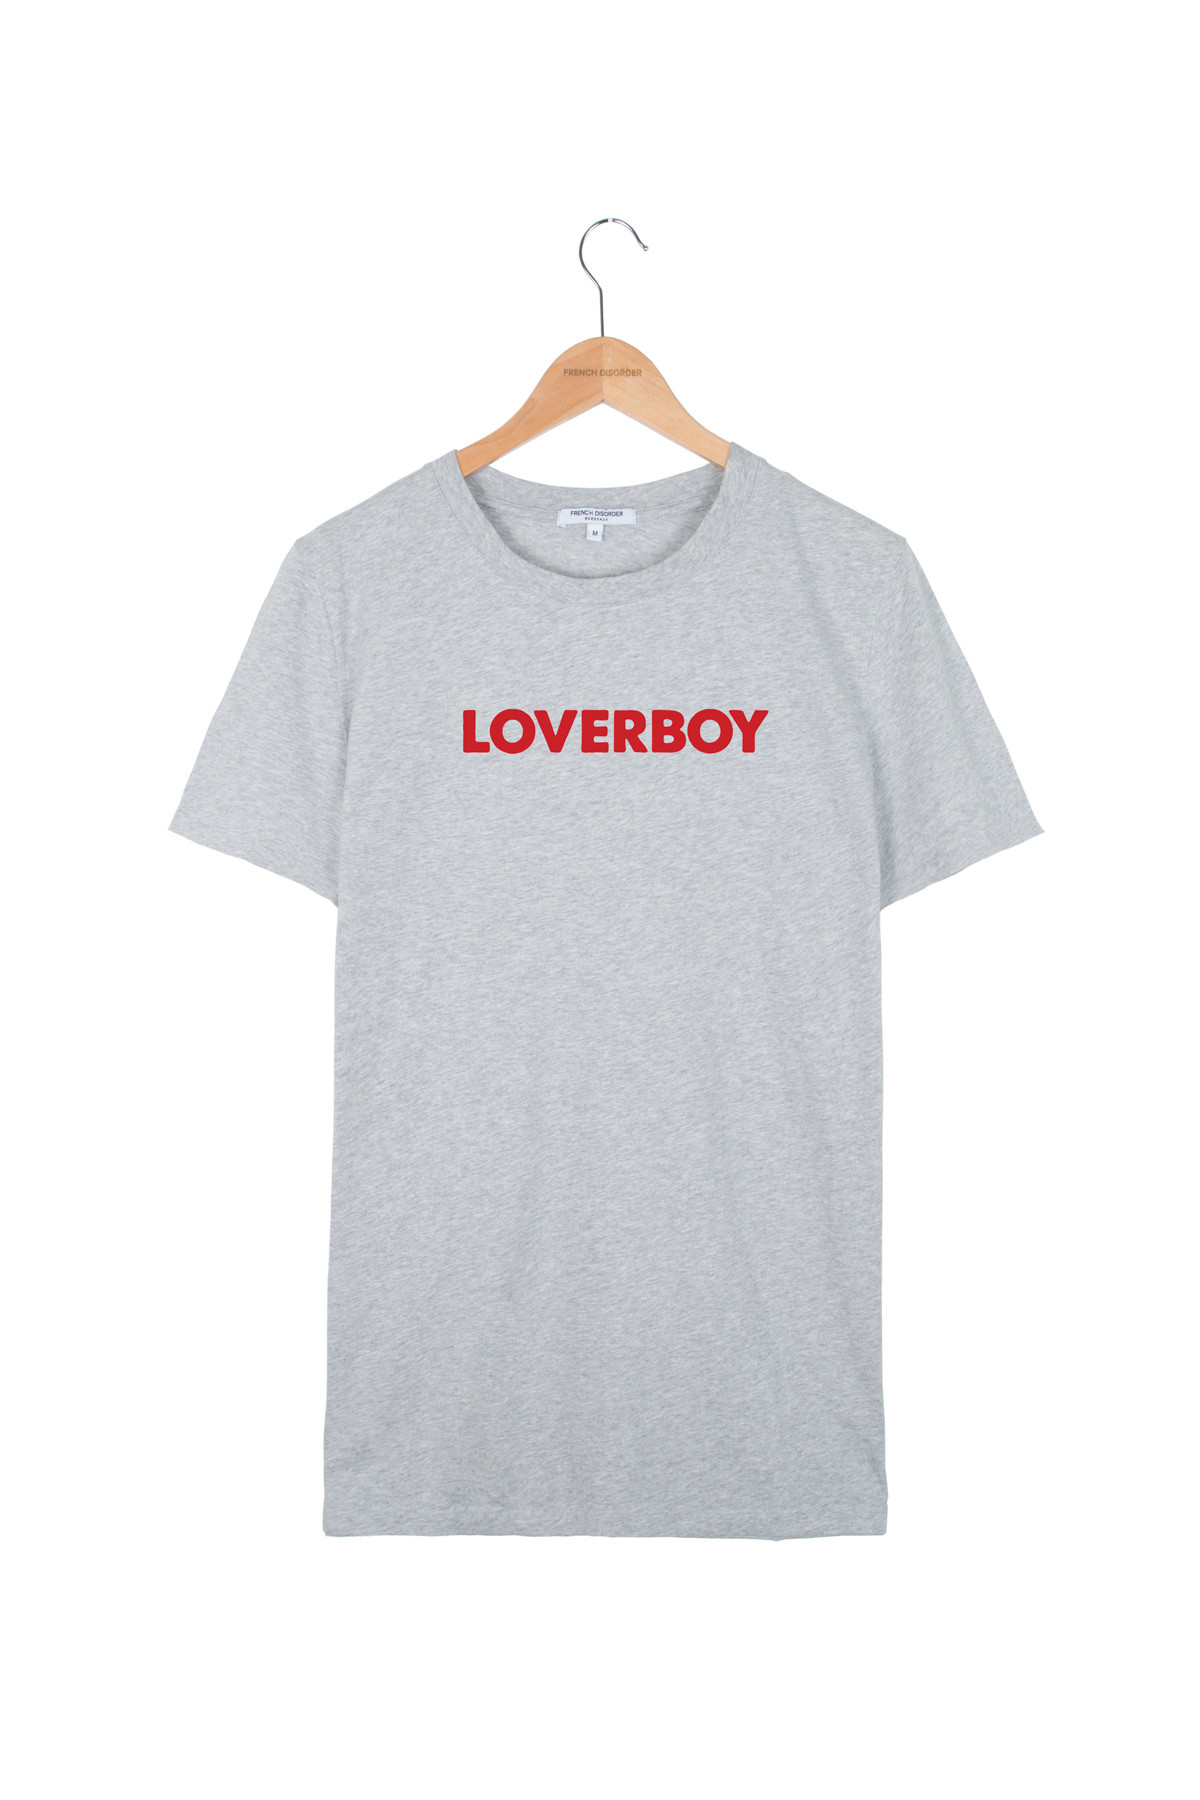 Tshirt LOVERBOY French Disorder